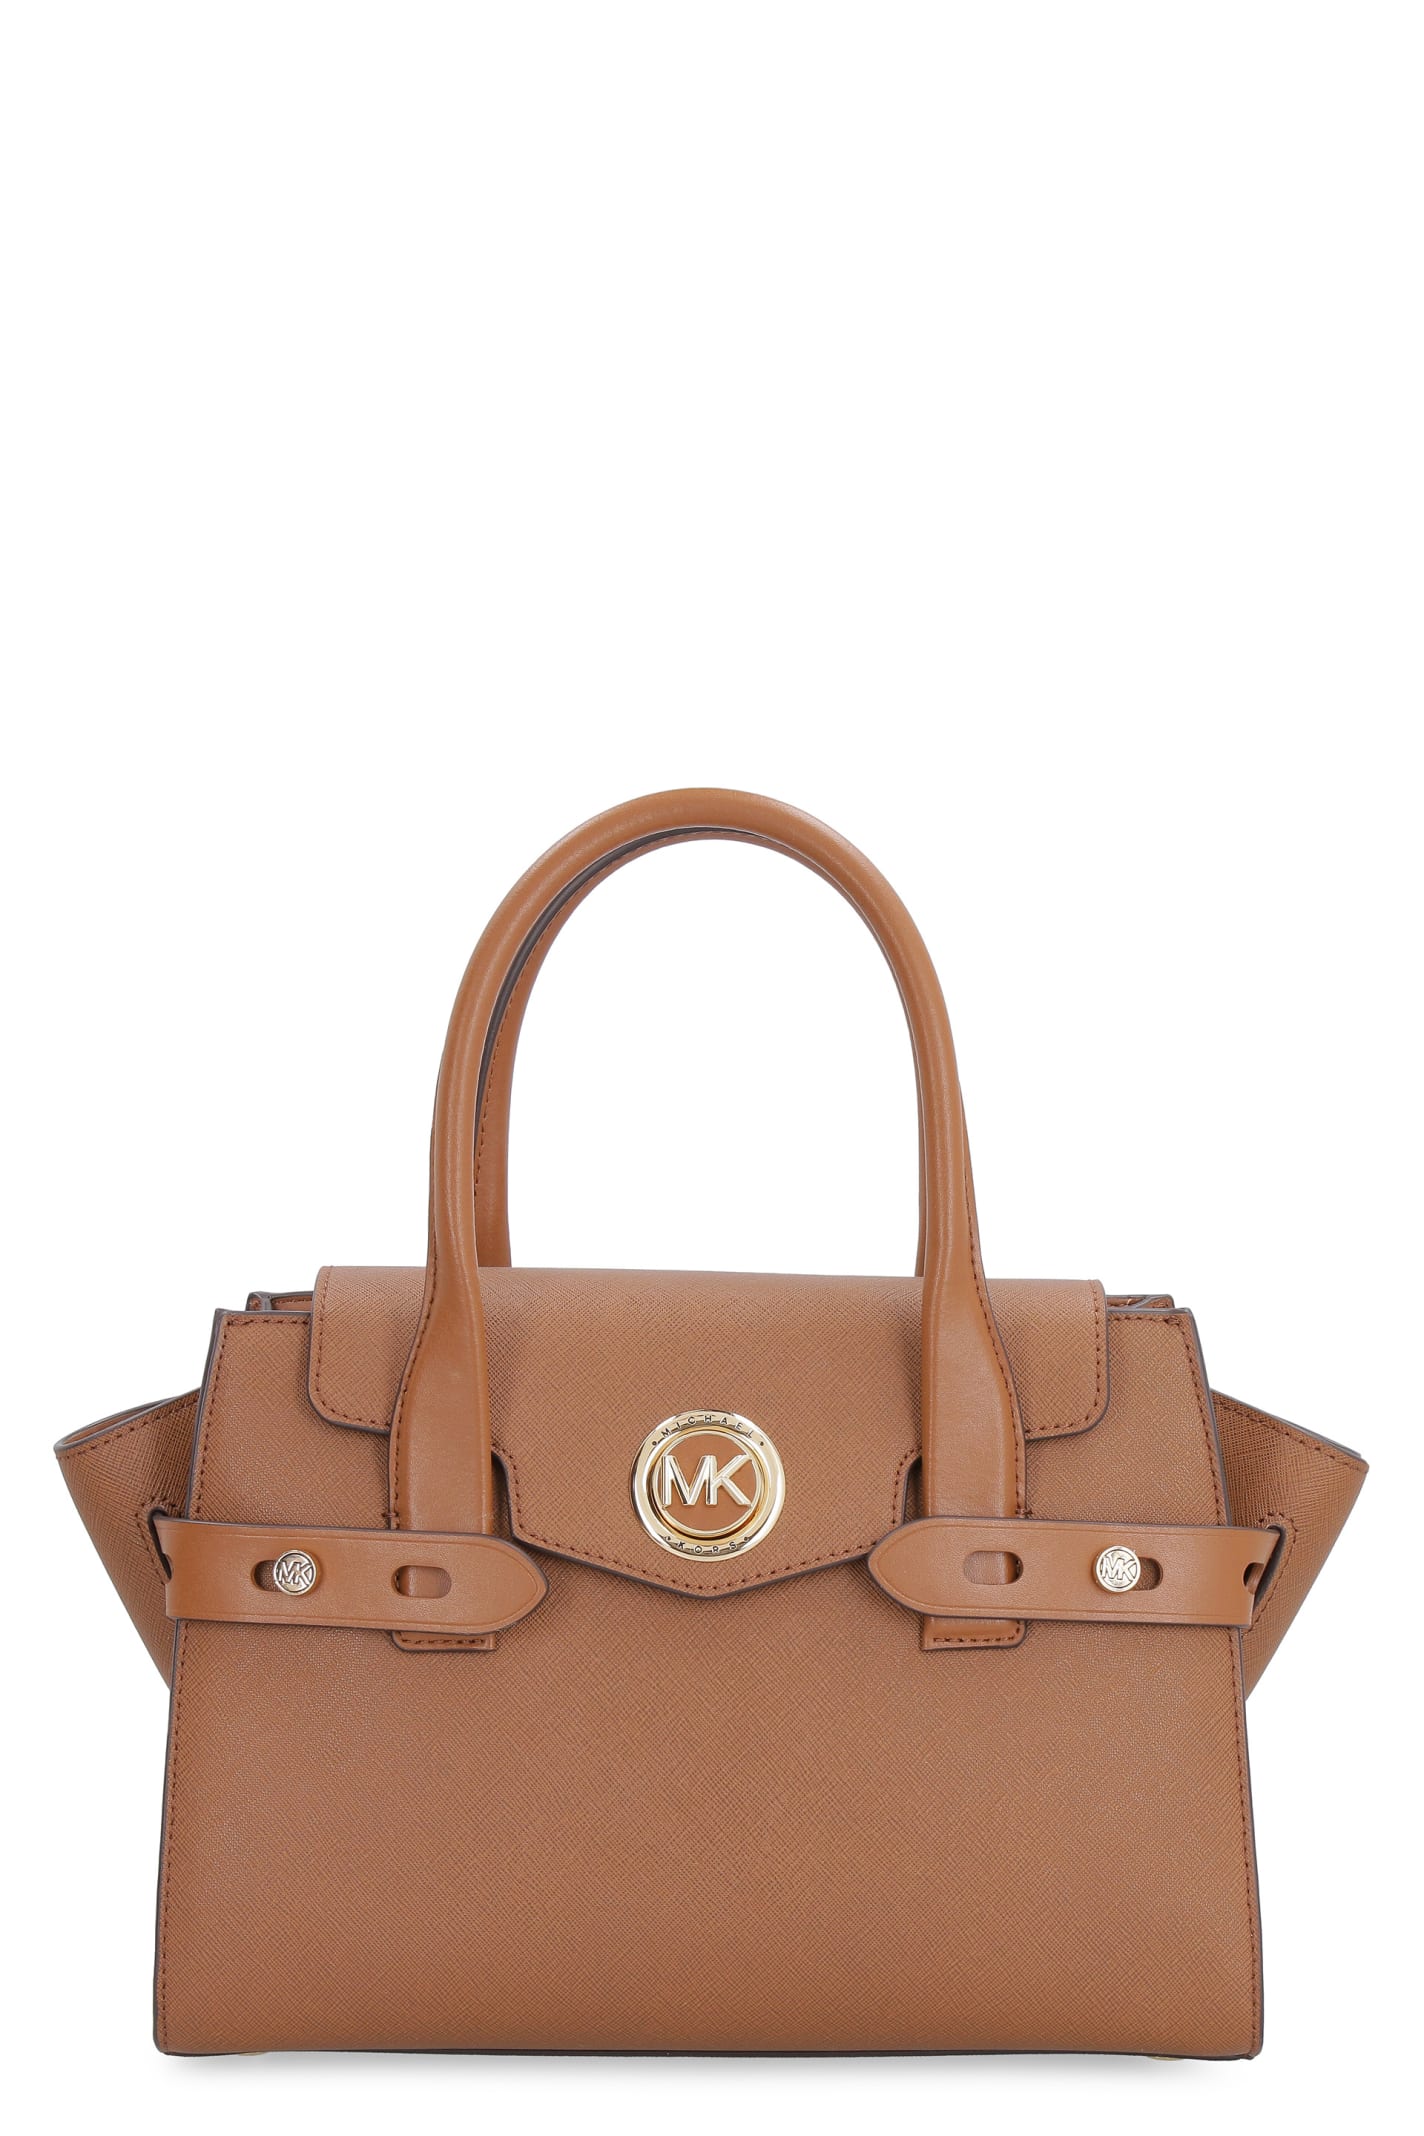 MICHAEL Michael Kors Carmen Leather Handbag